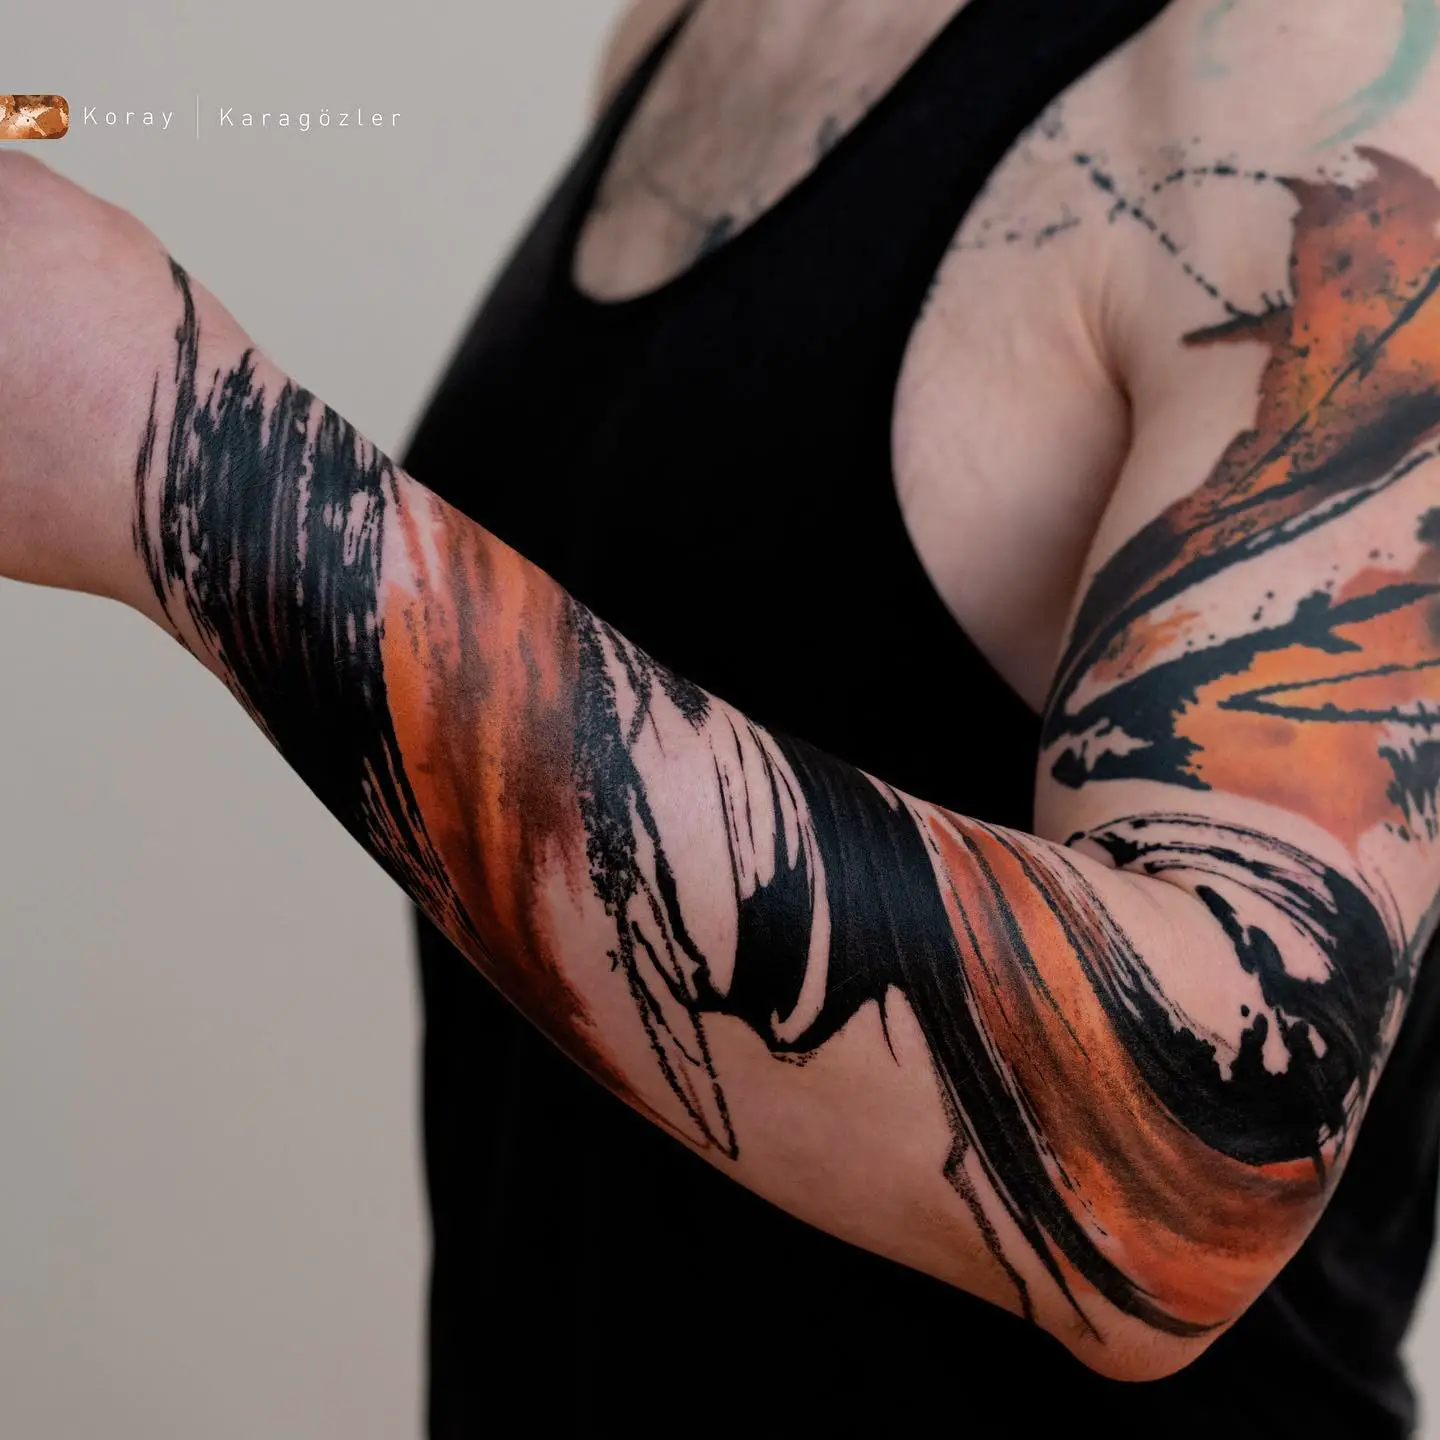 Watercolor tattoos for men by koray laragozler